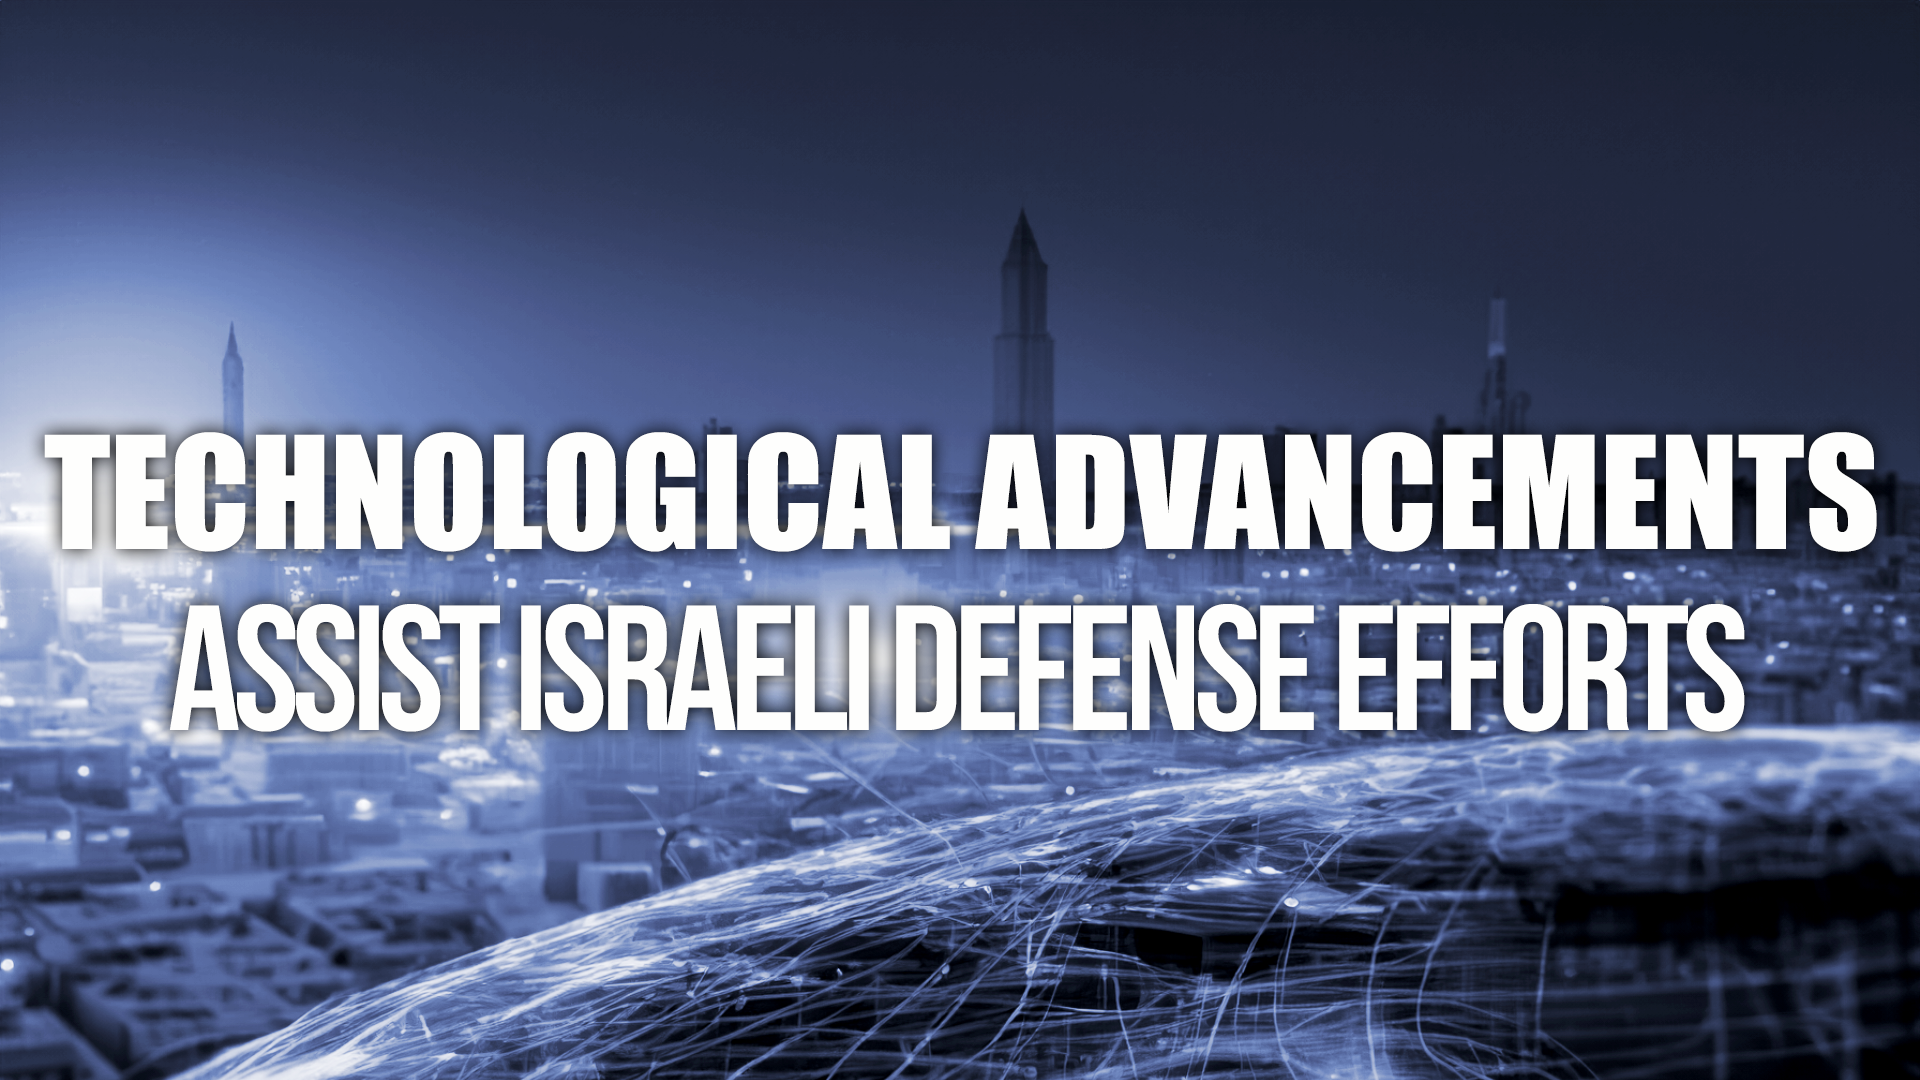 Technological advancements assist Israeli defense efforts